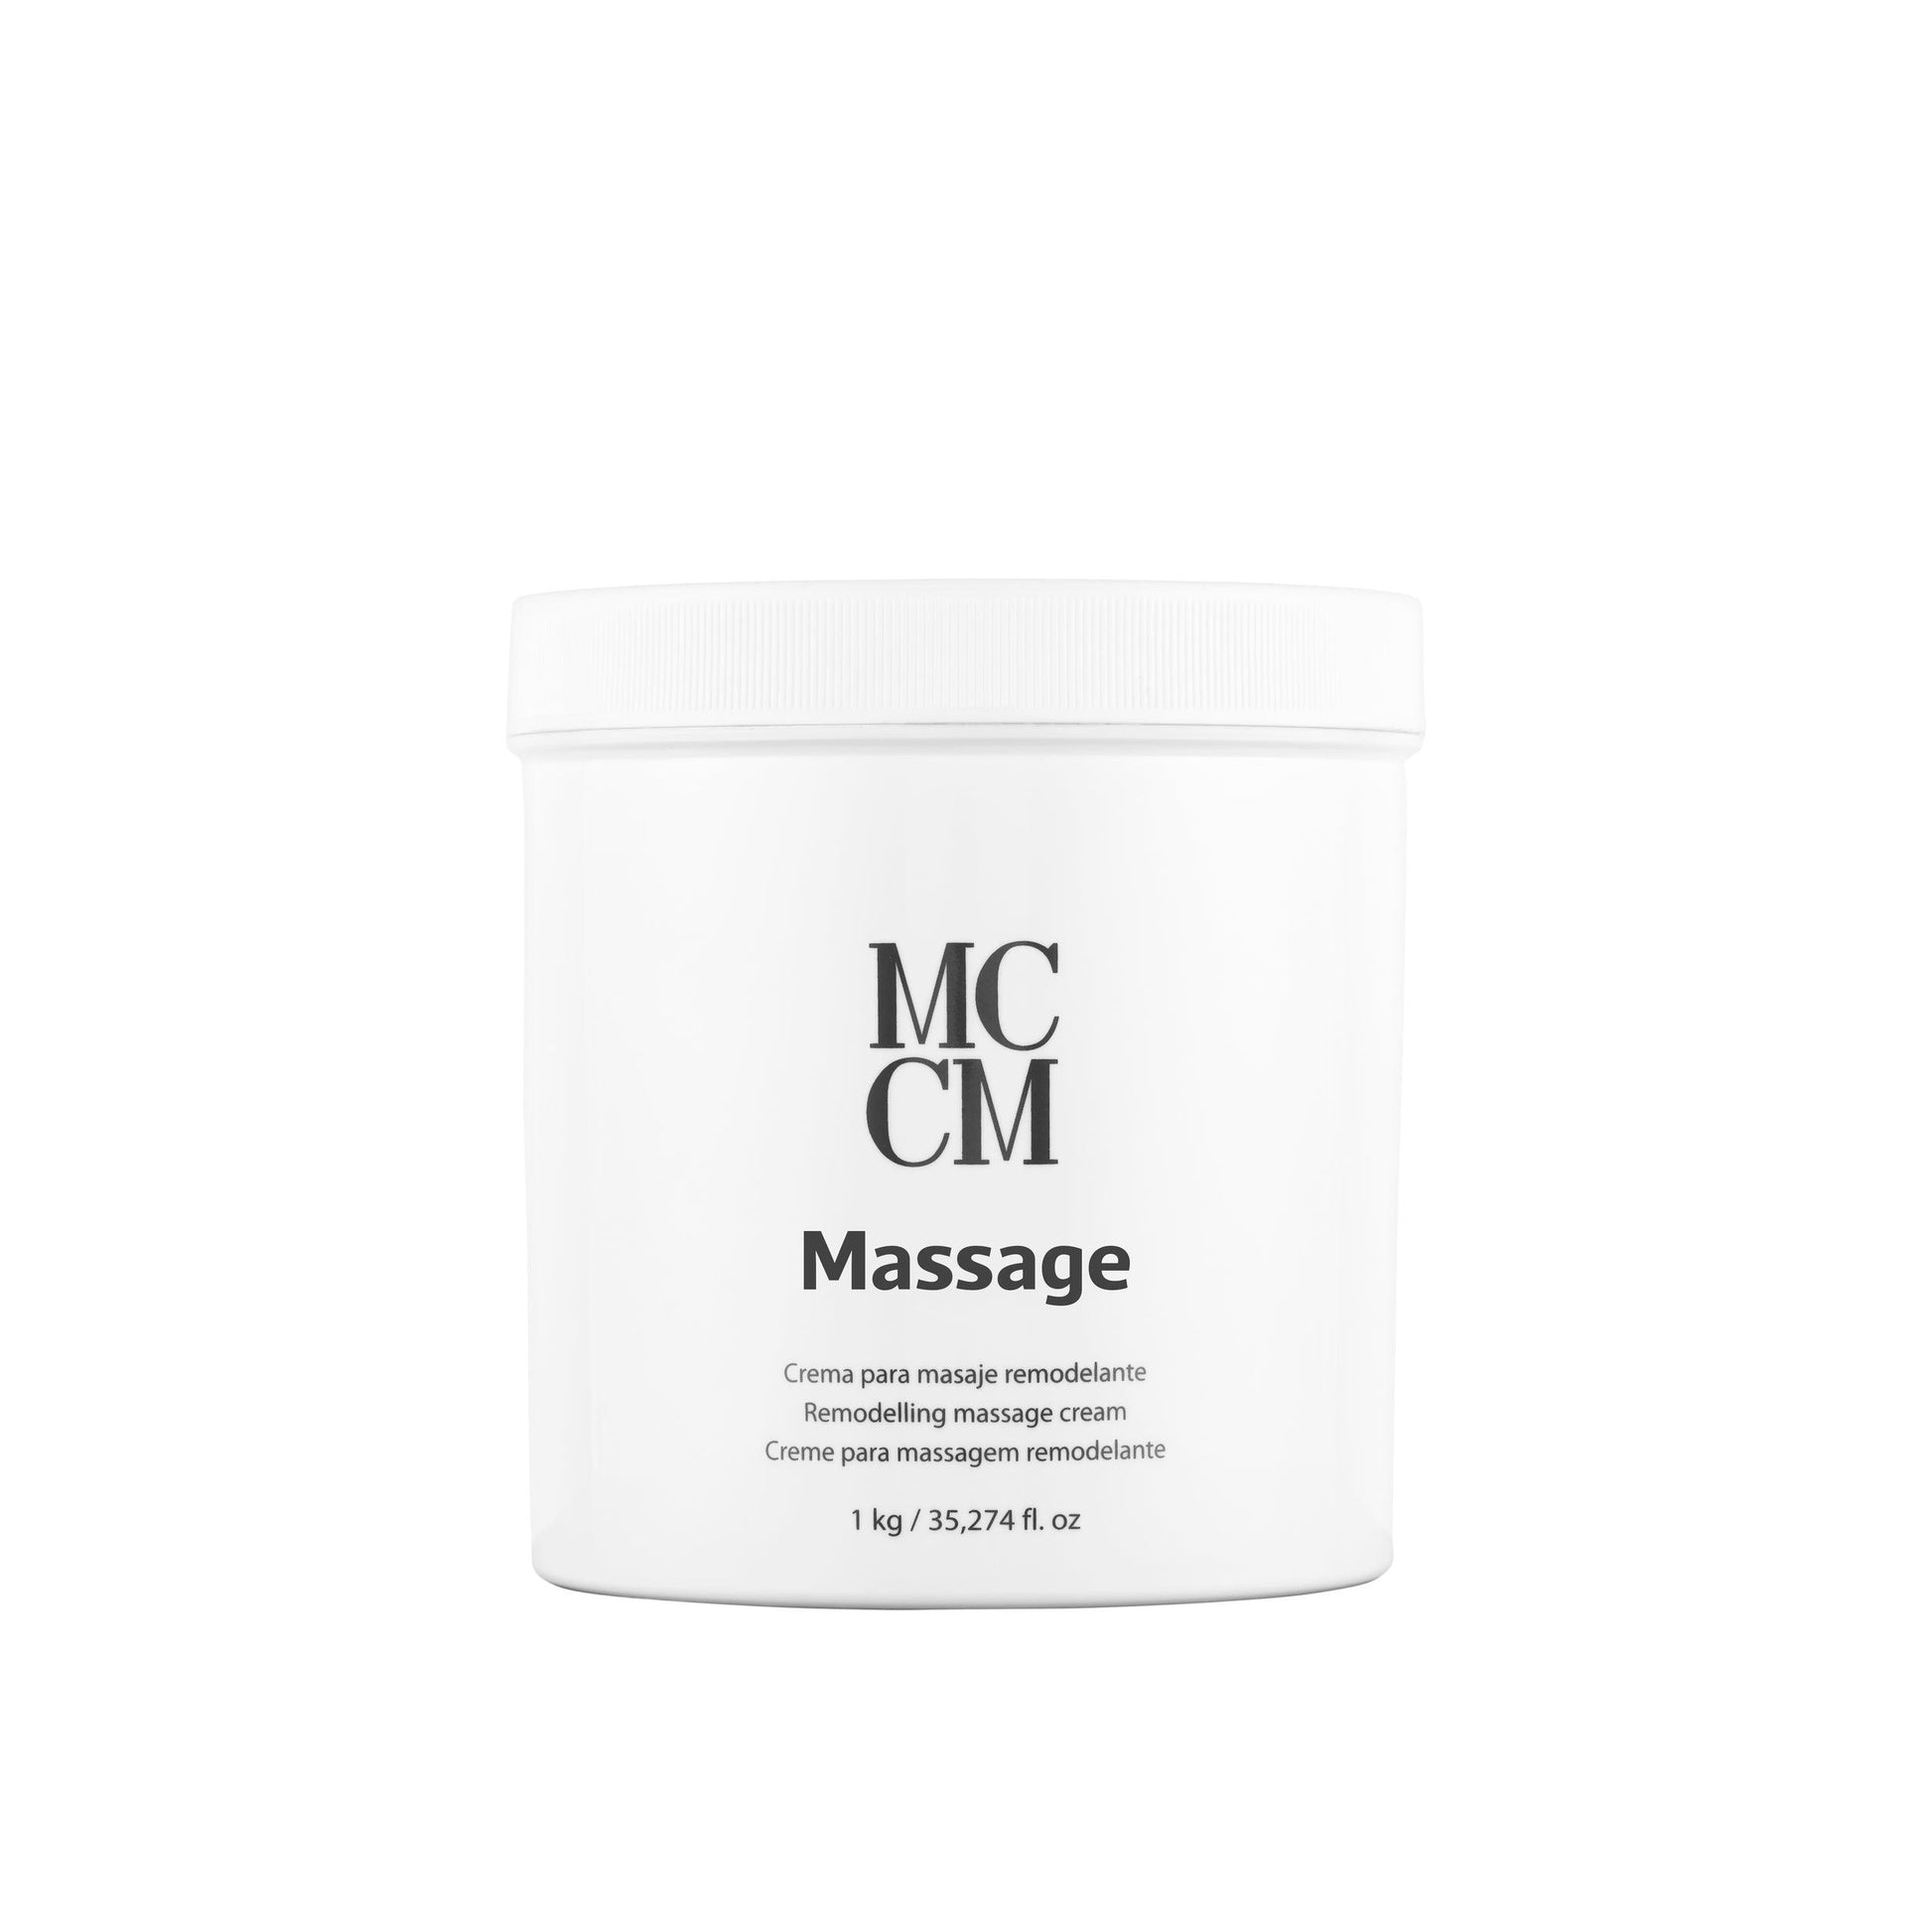 Massage Cream - MCCM Medical Cosmetics